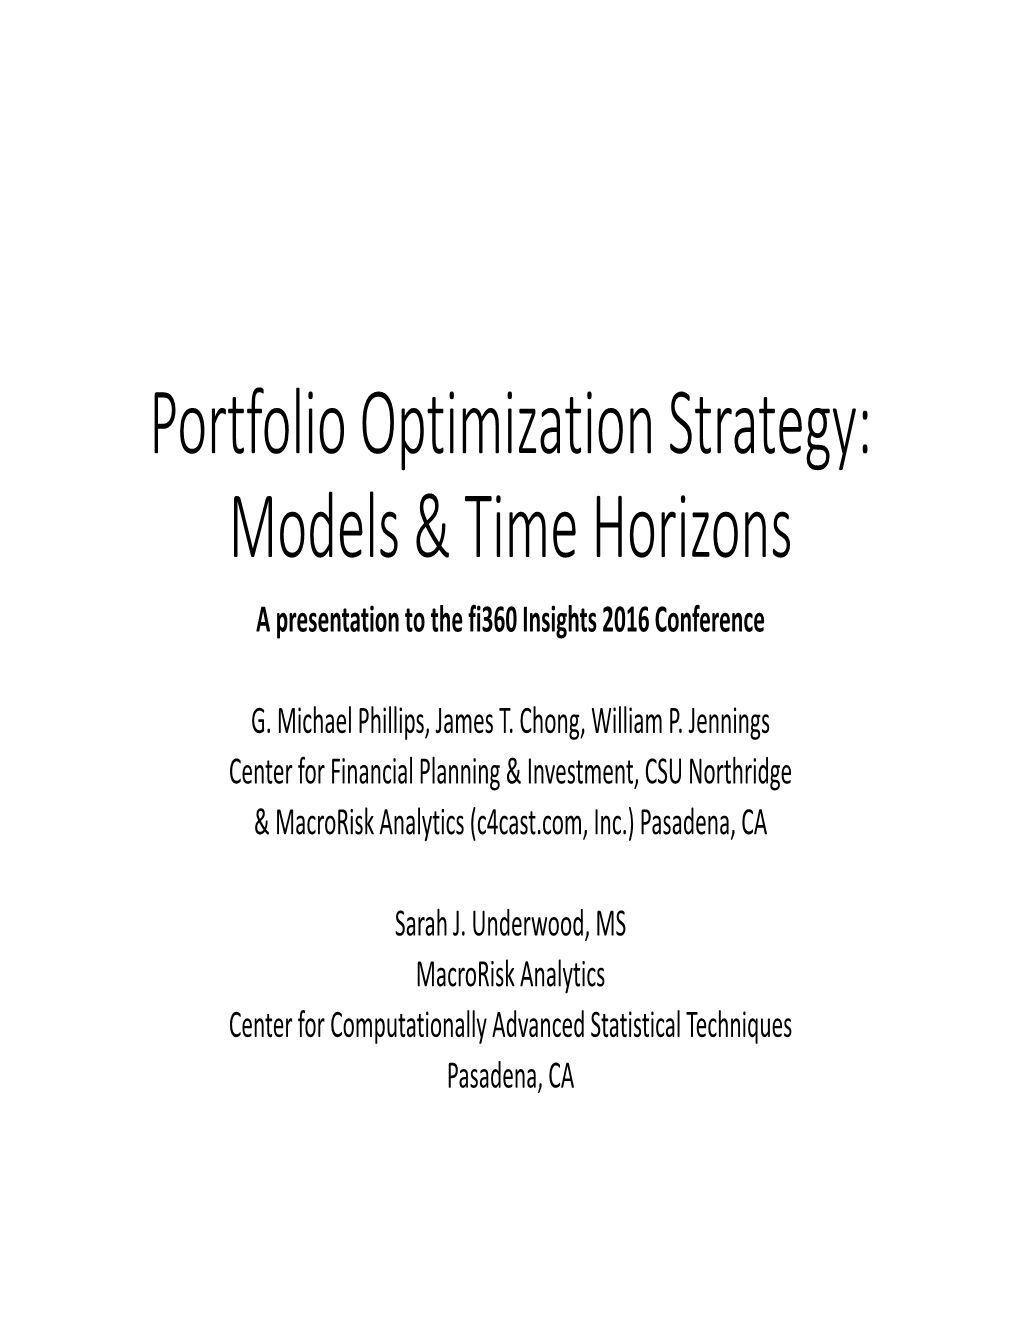 Portfolio Optimization Strategy: Models & Time Horizons